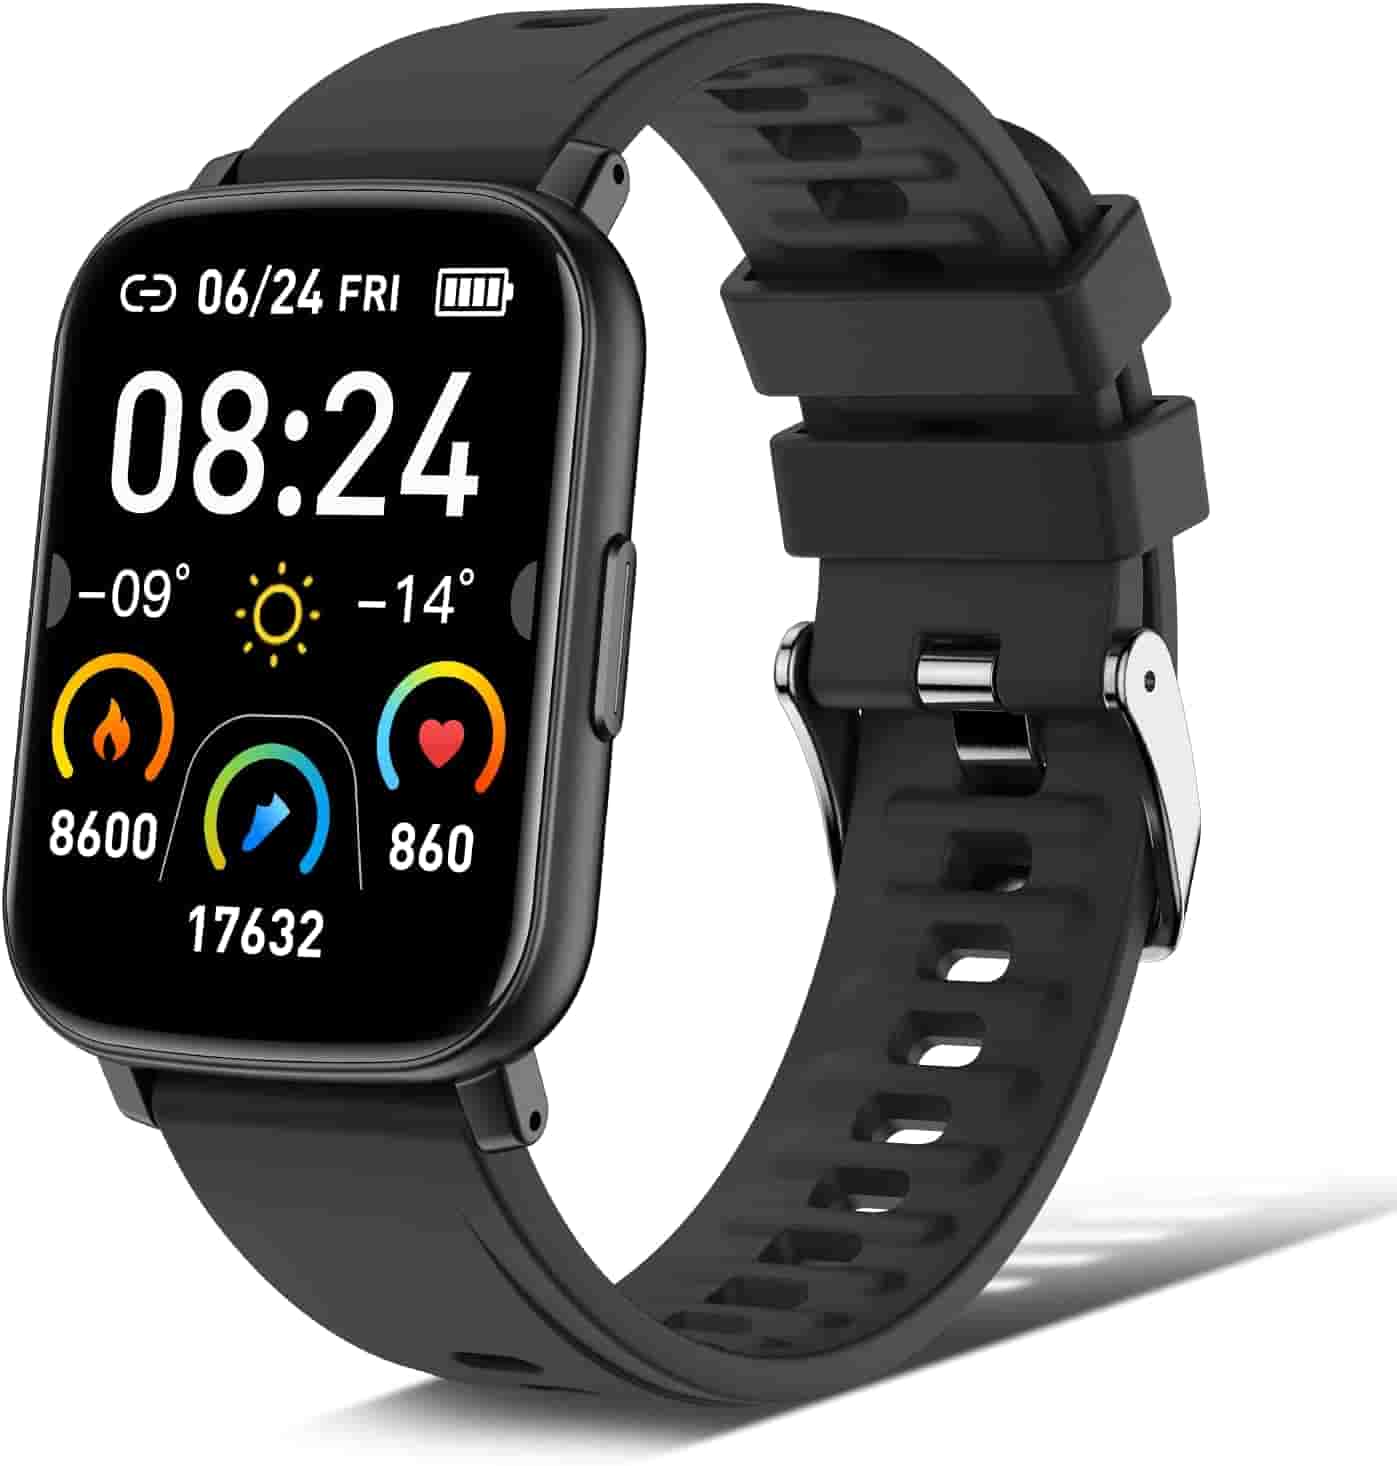 Amazon smartwatch 30122021 - Androiditaly.com